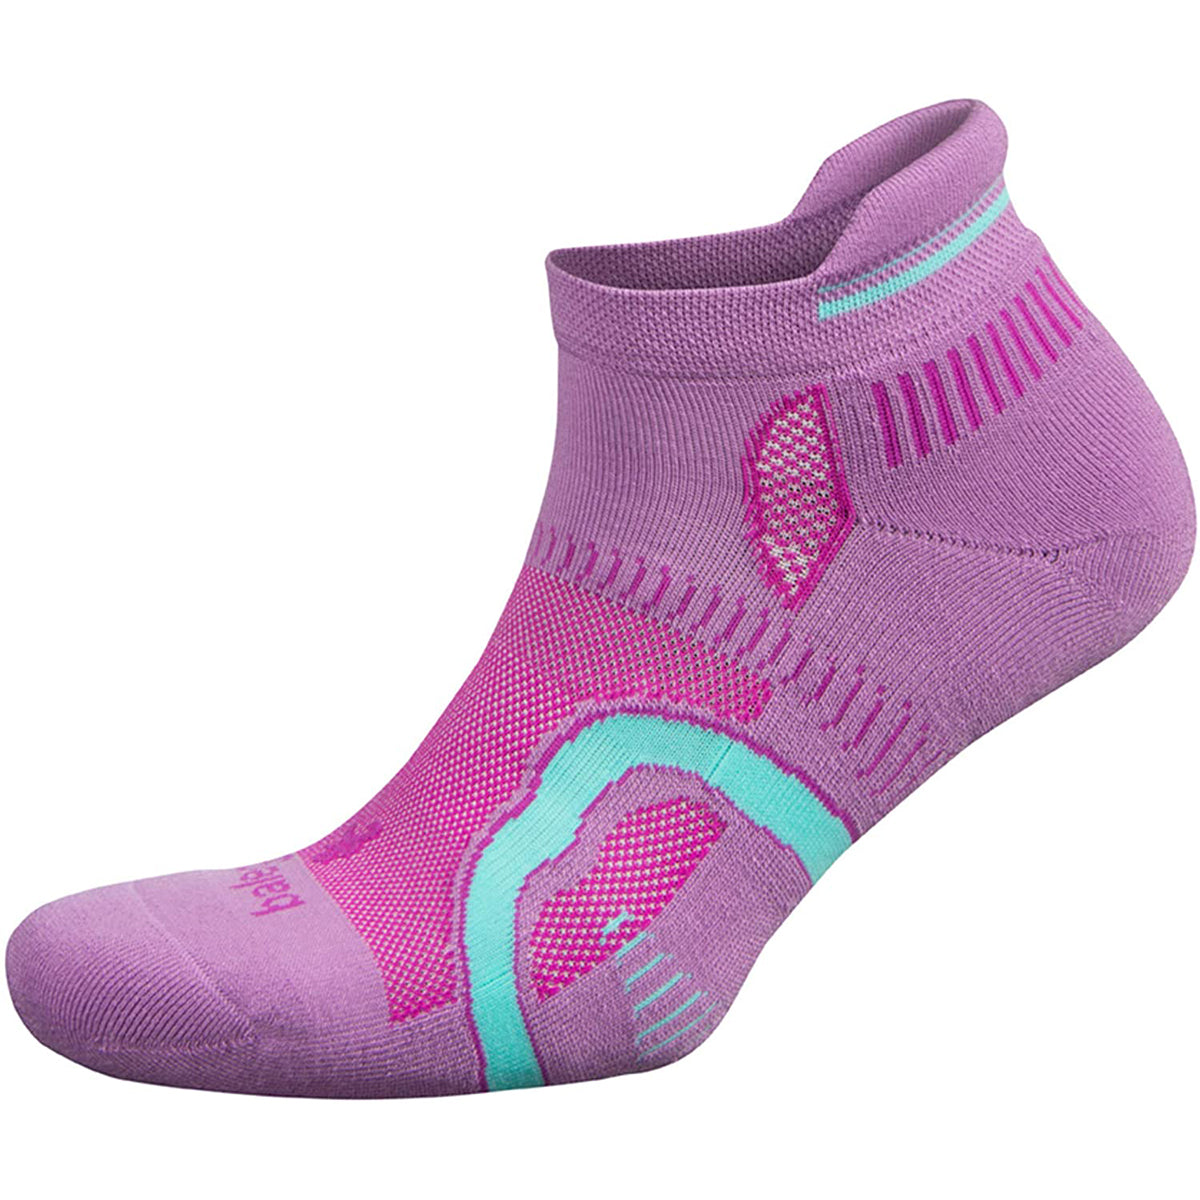 Balega Hidden Contour No Show Running Socks - Bright Lilac/Pink Balega